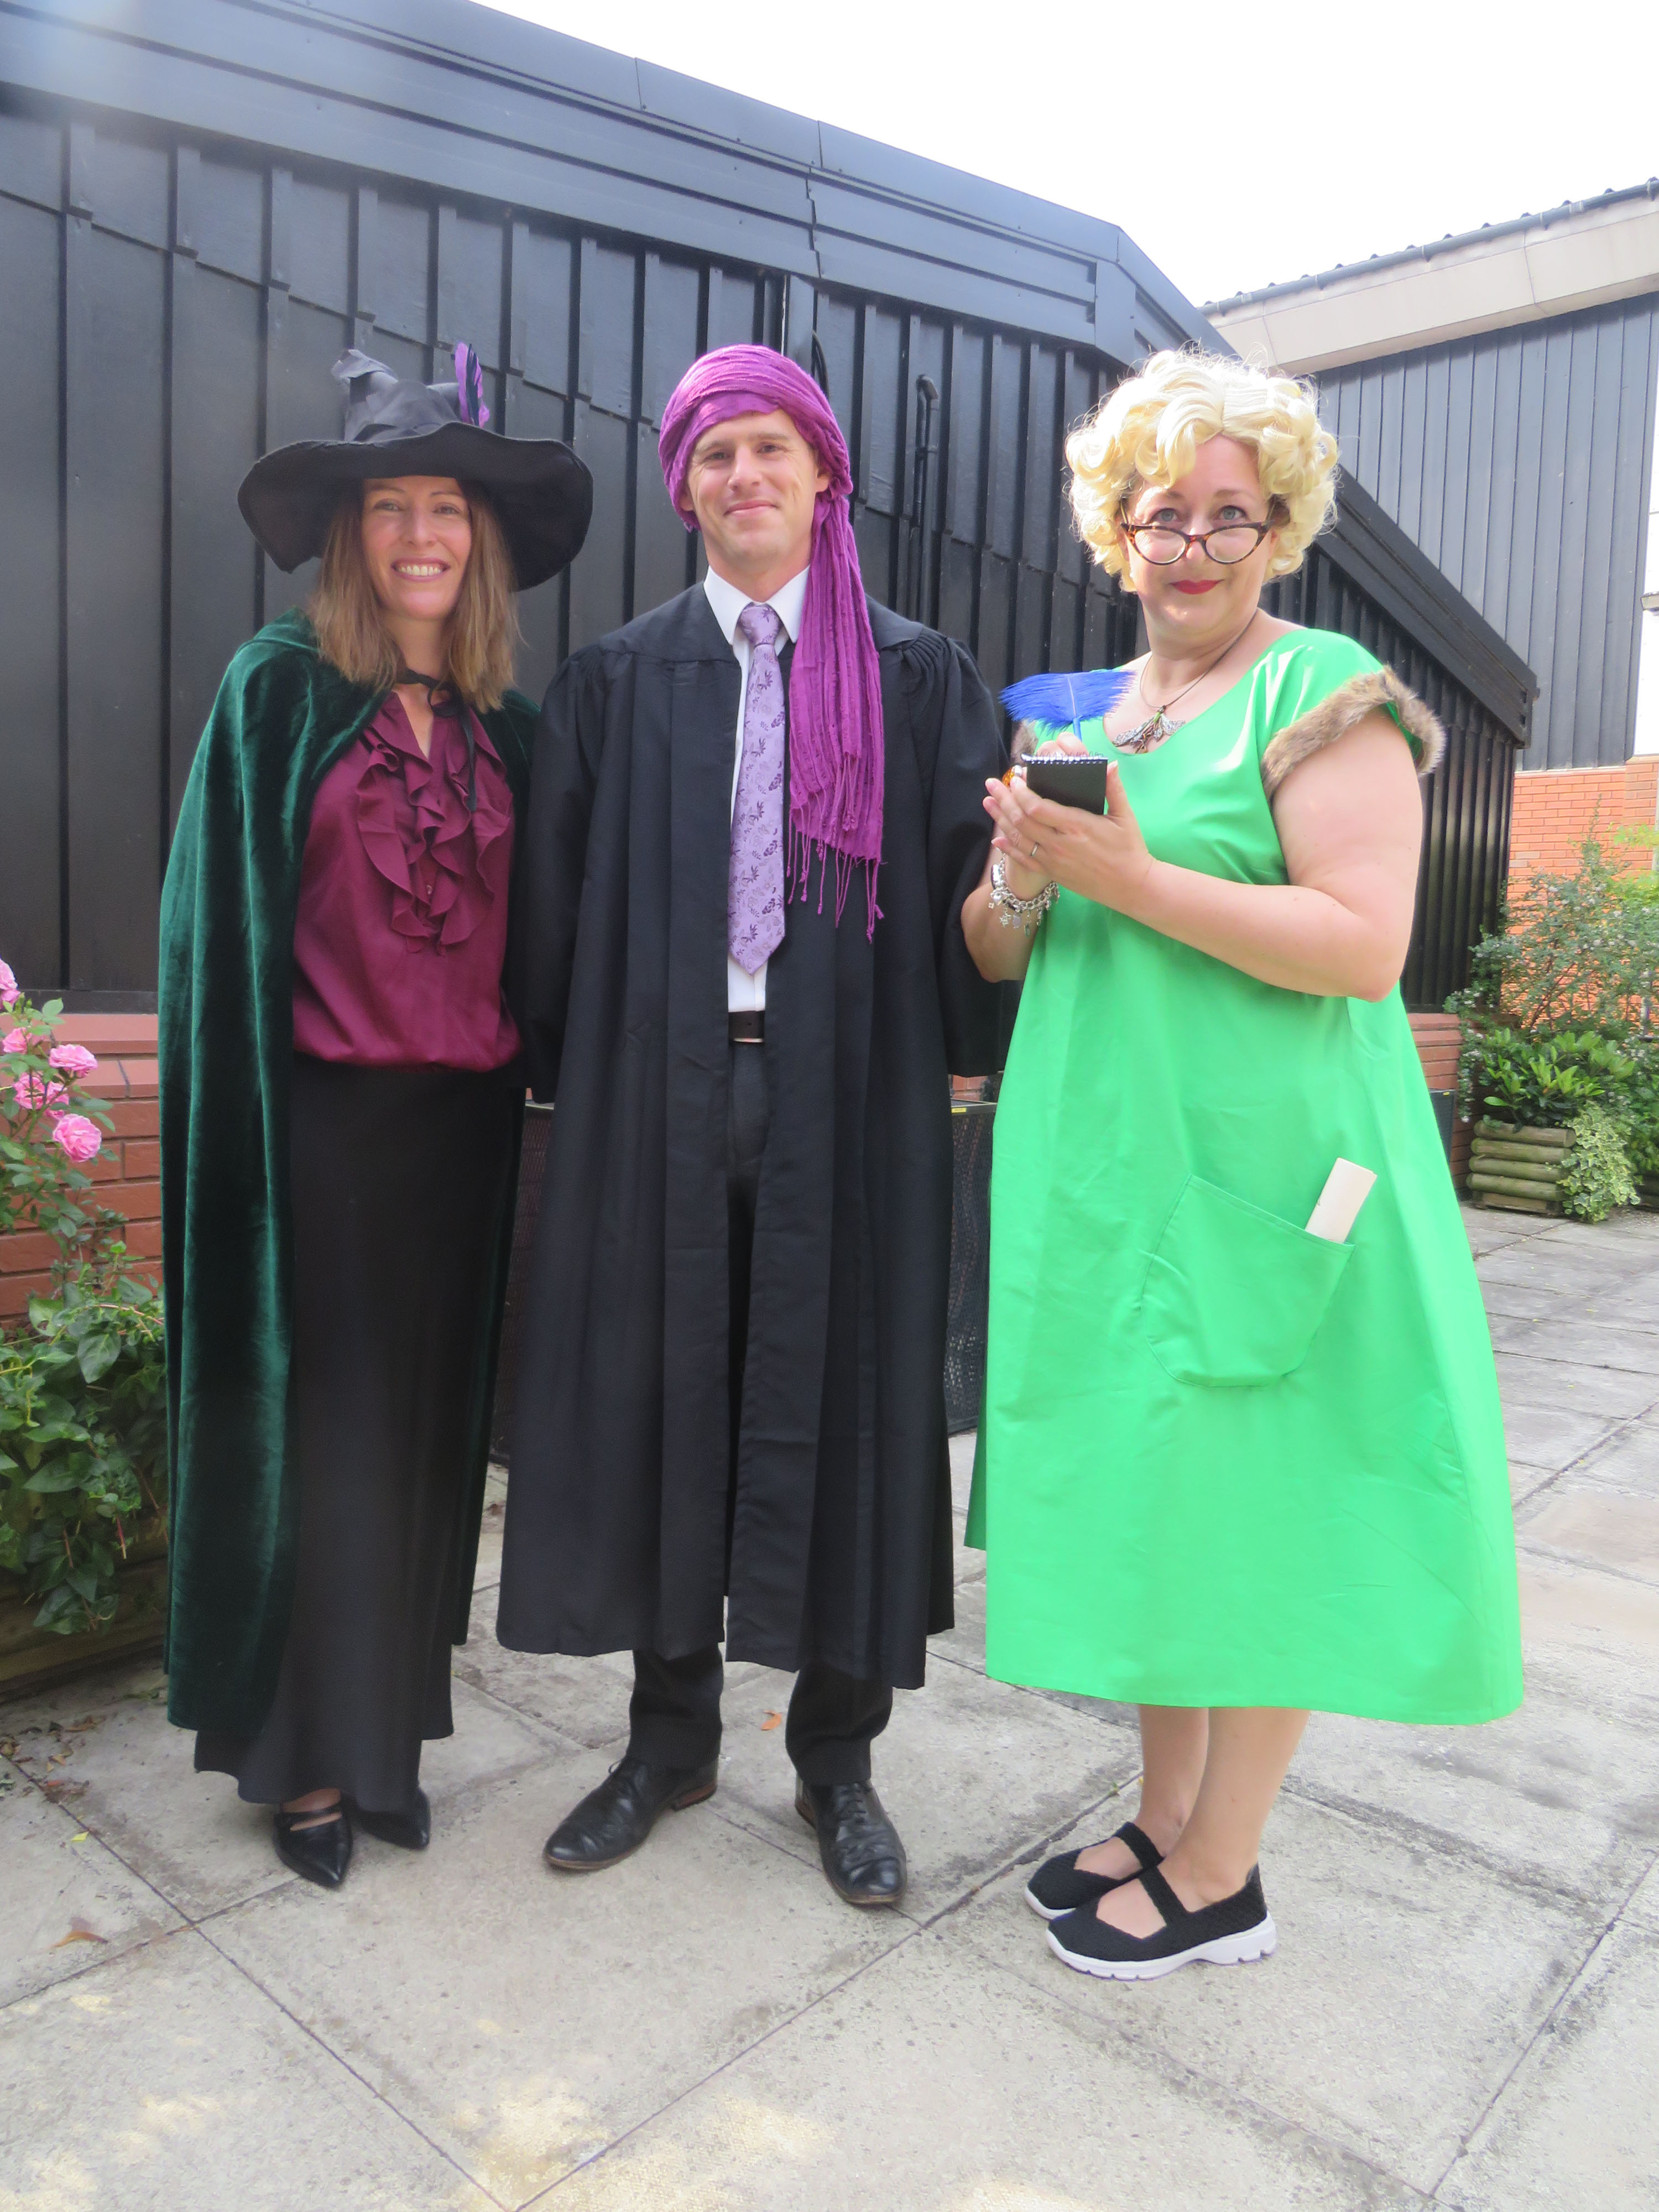 Harry Potter Day at Bromsgrove Prep School, 20th June 2017